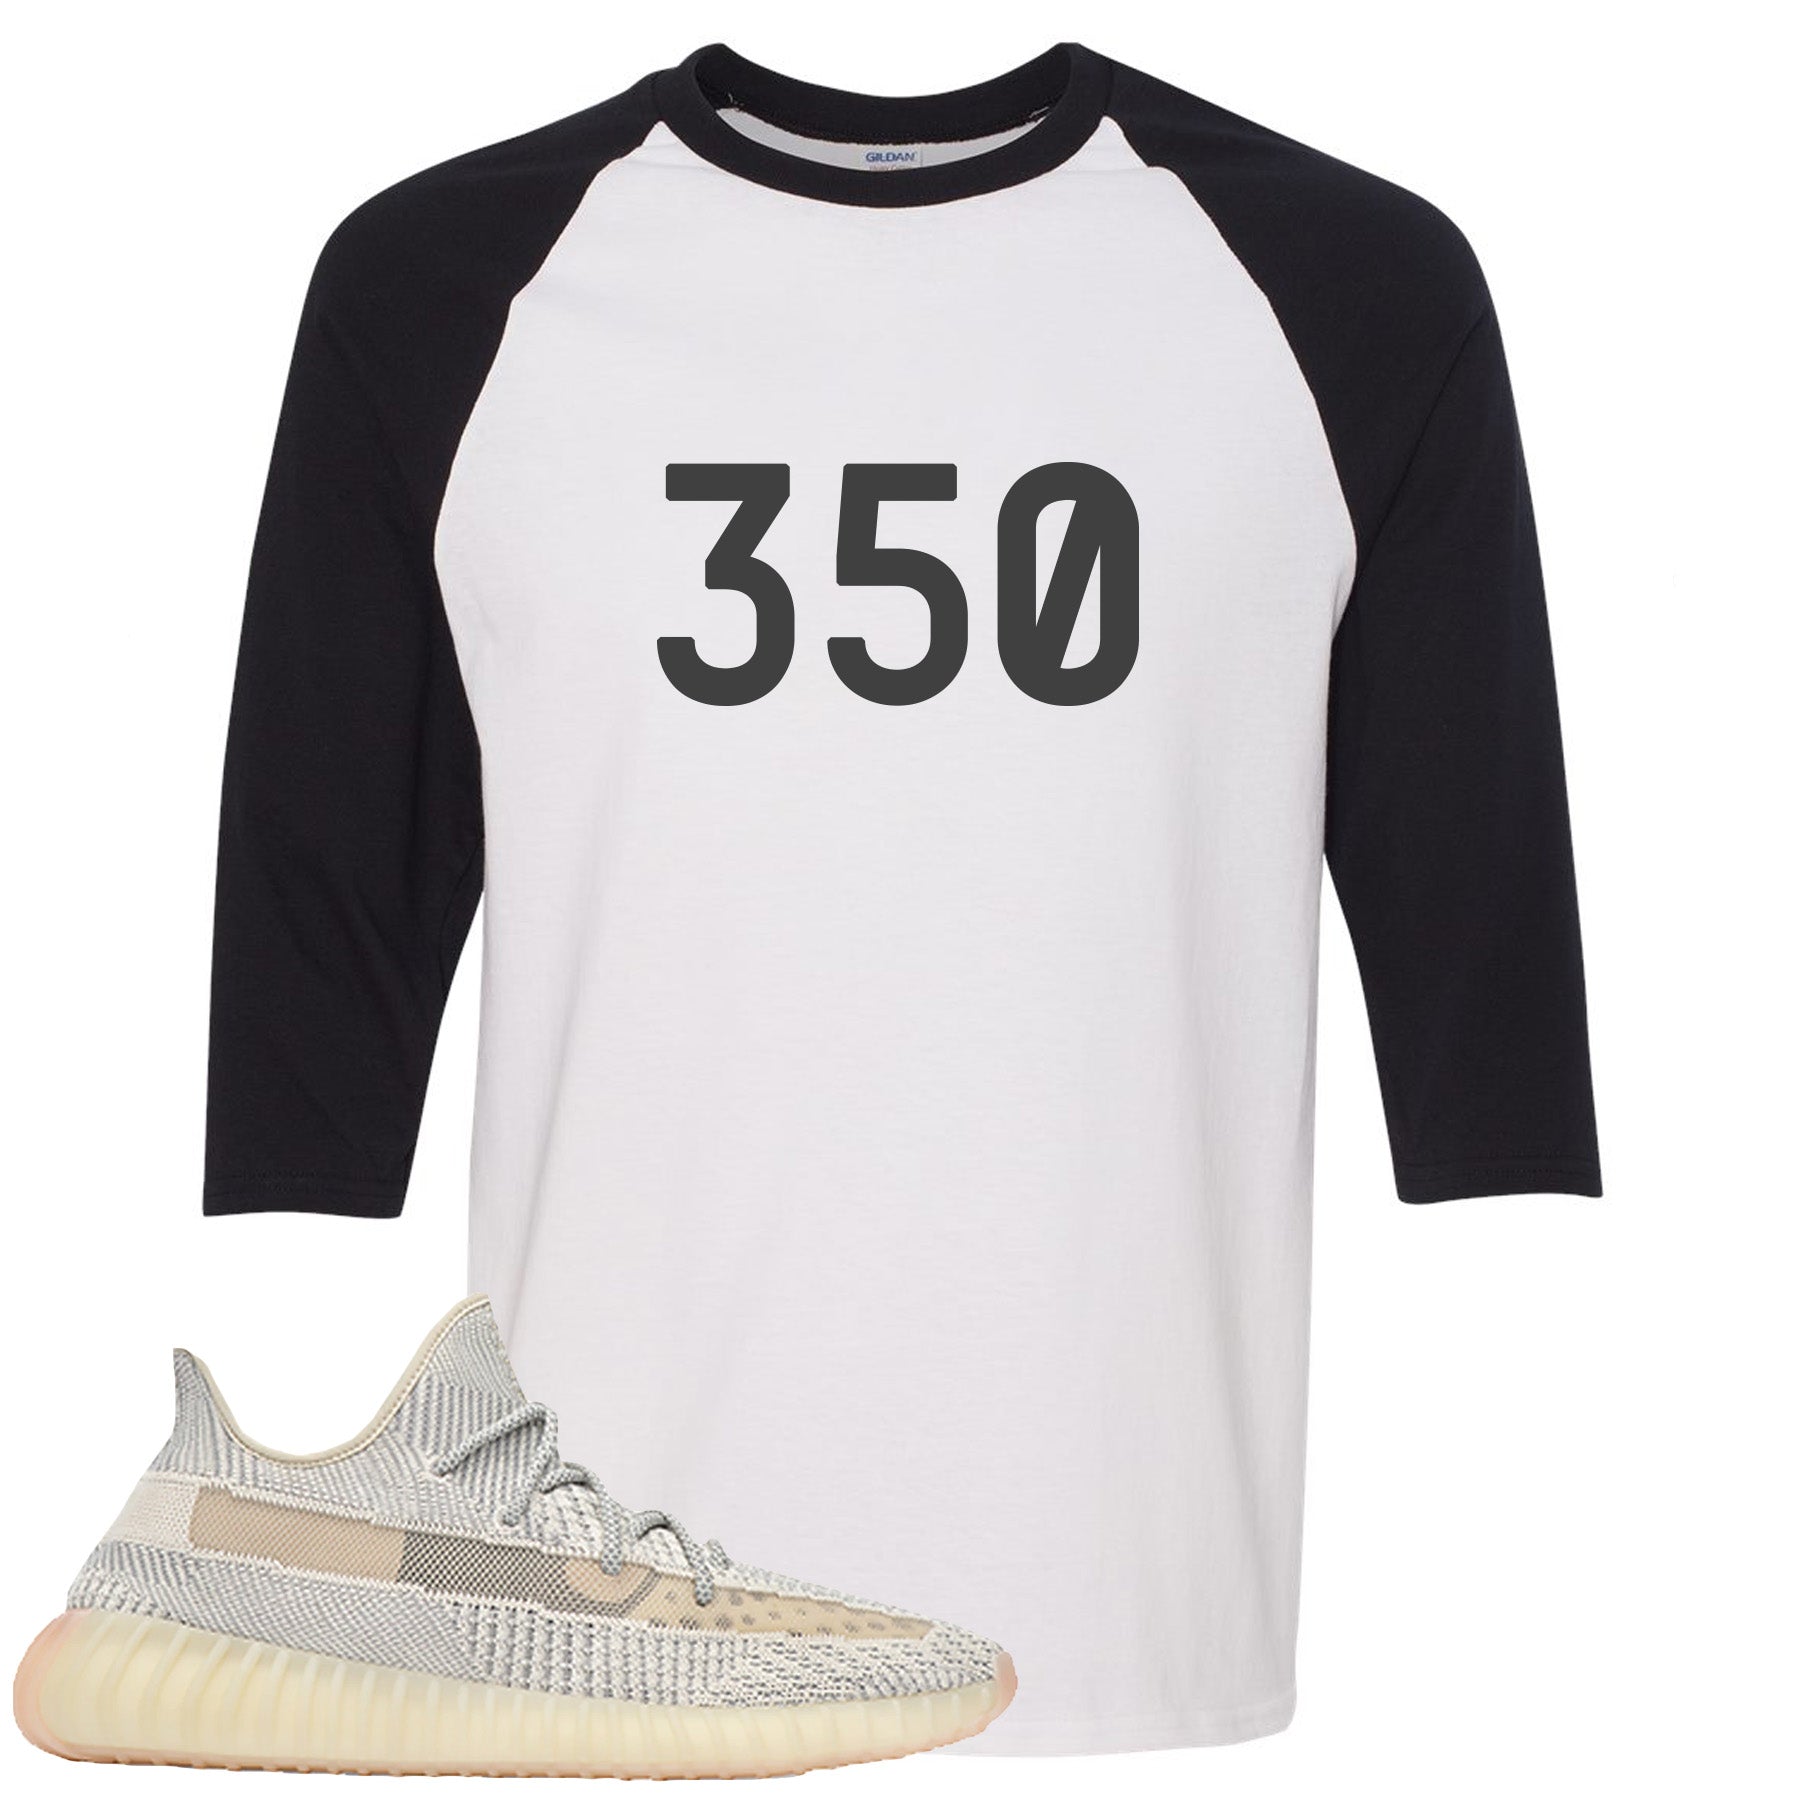 yeezy 350 t shirt